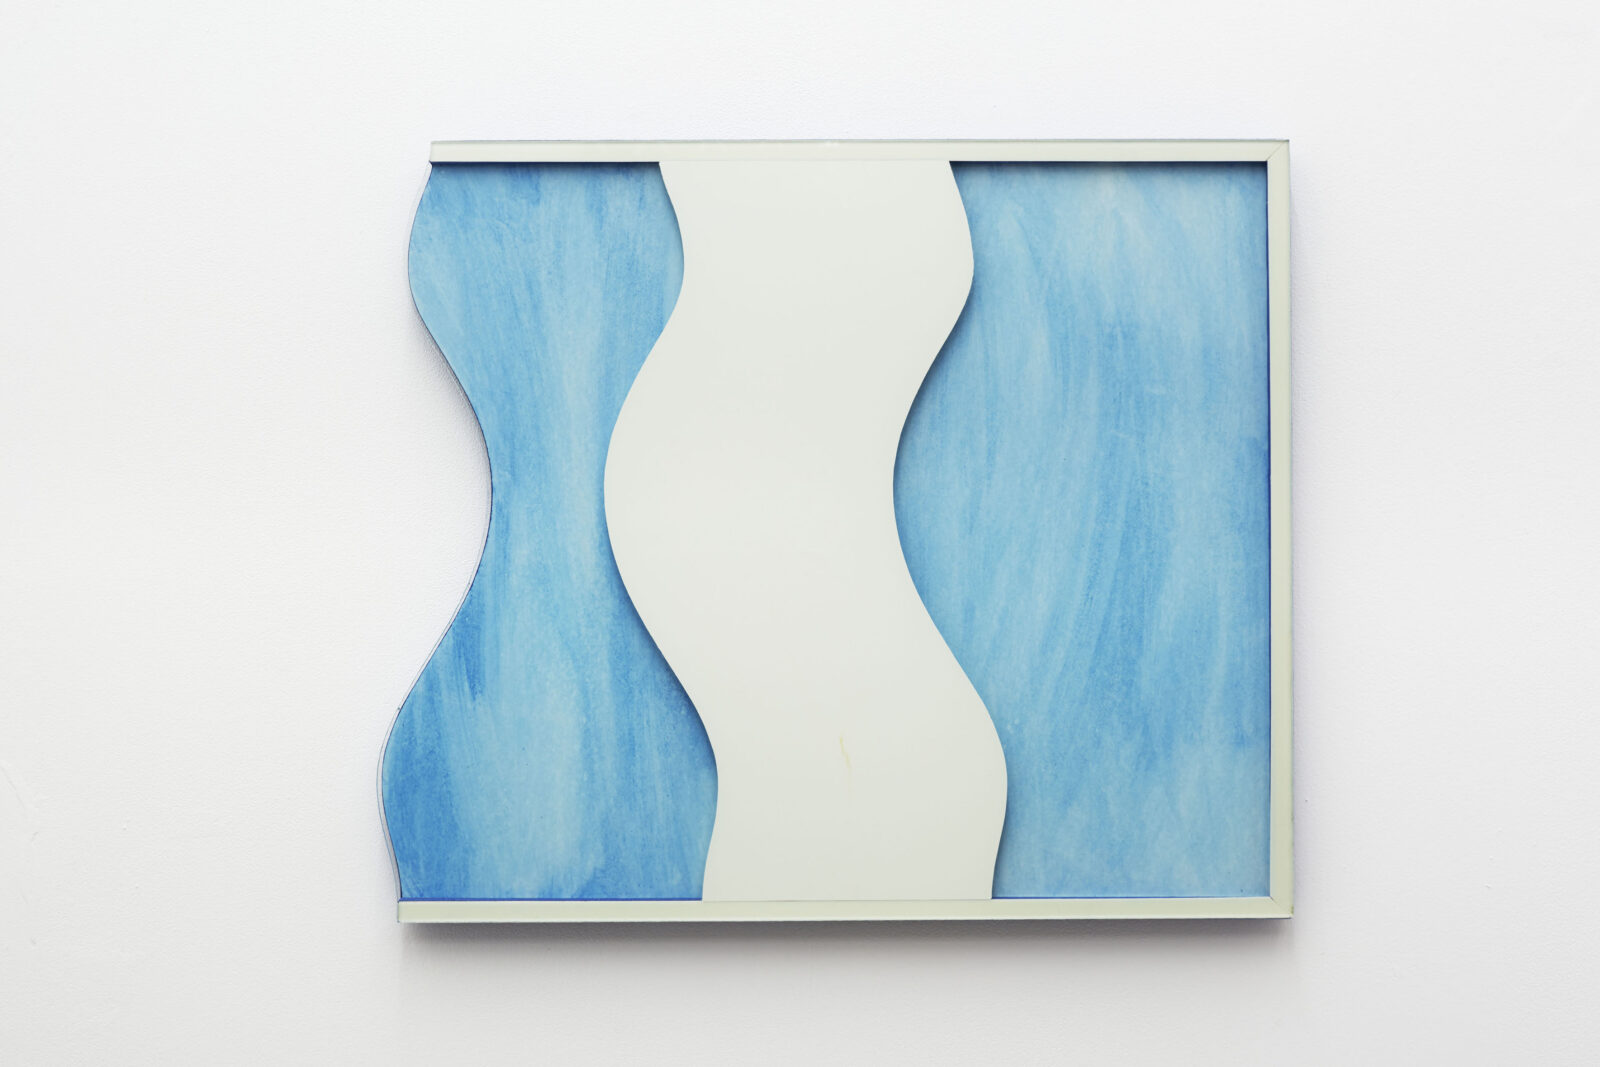 Marcin Zarzeka
Around the corner #4
2015
gouache and plaster on glass, foam board, double-sided tape, rayon tape
39 × 47 cm